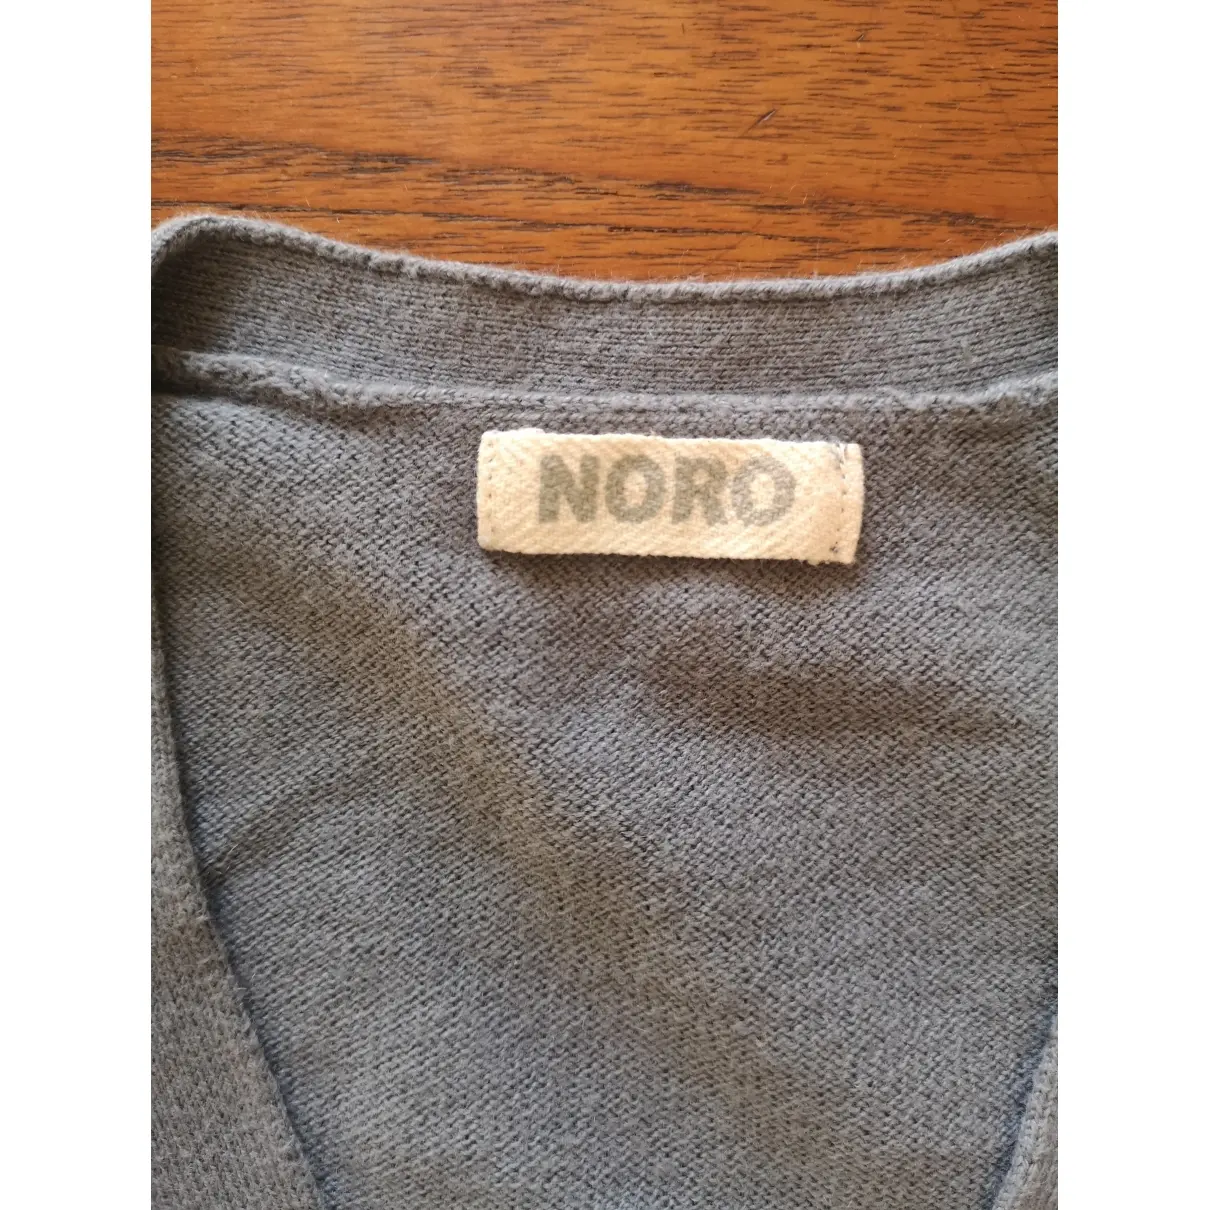 Buy Noro Cashmere jacket online